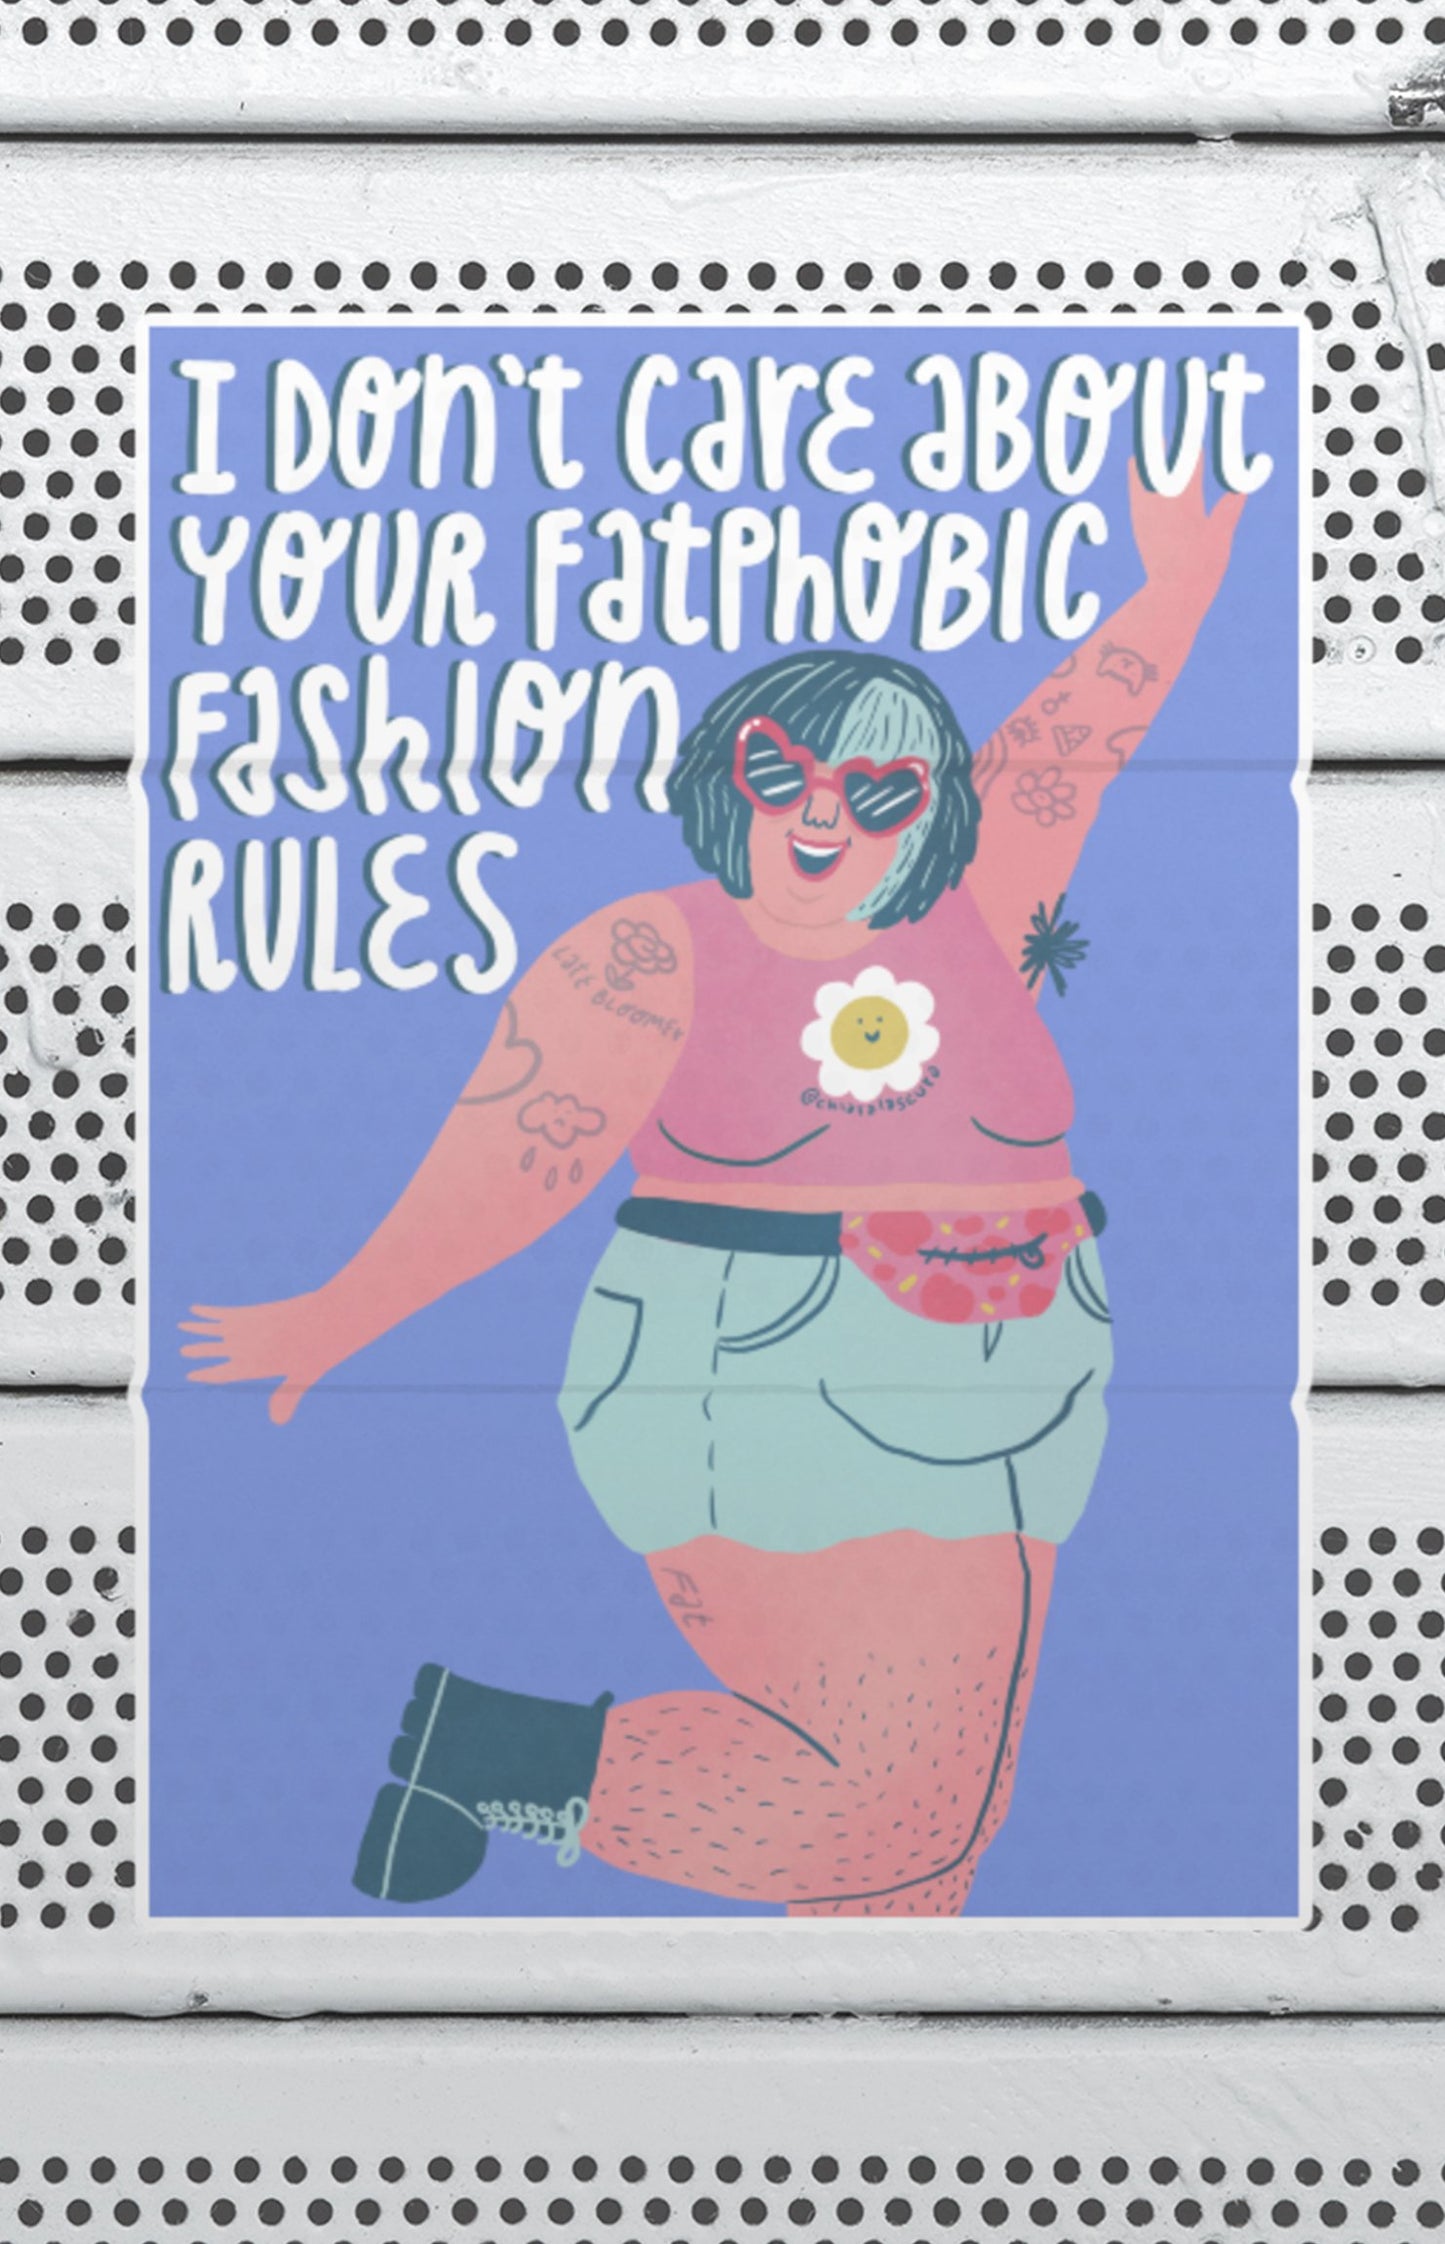 Fashion rules - sticker